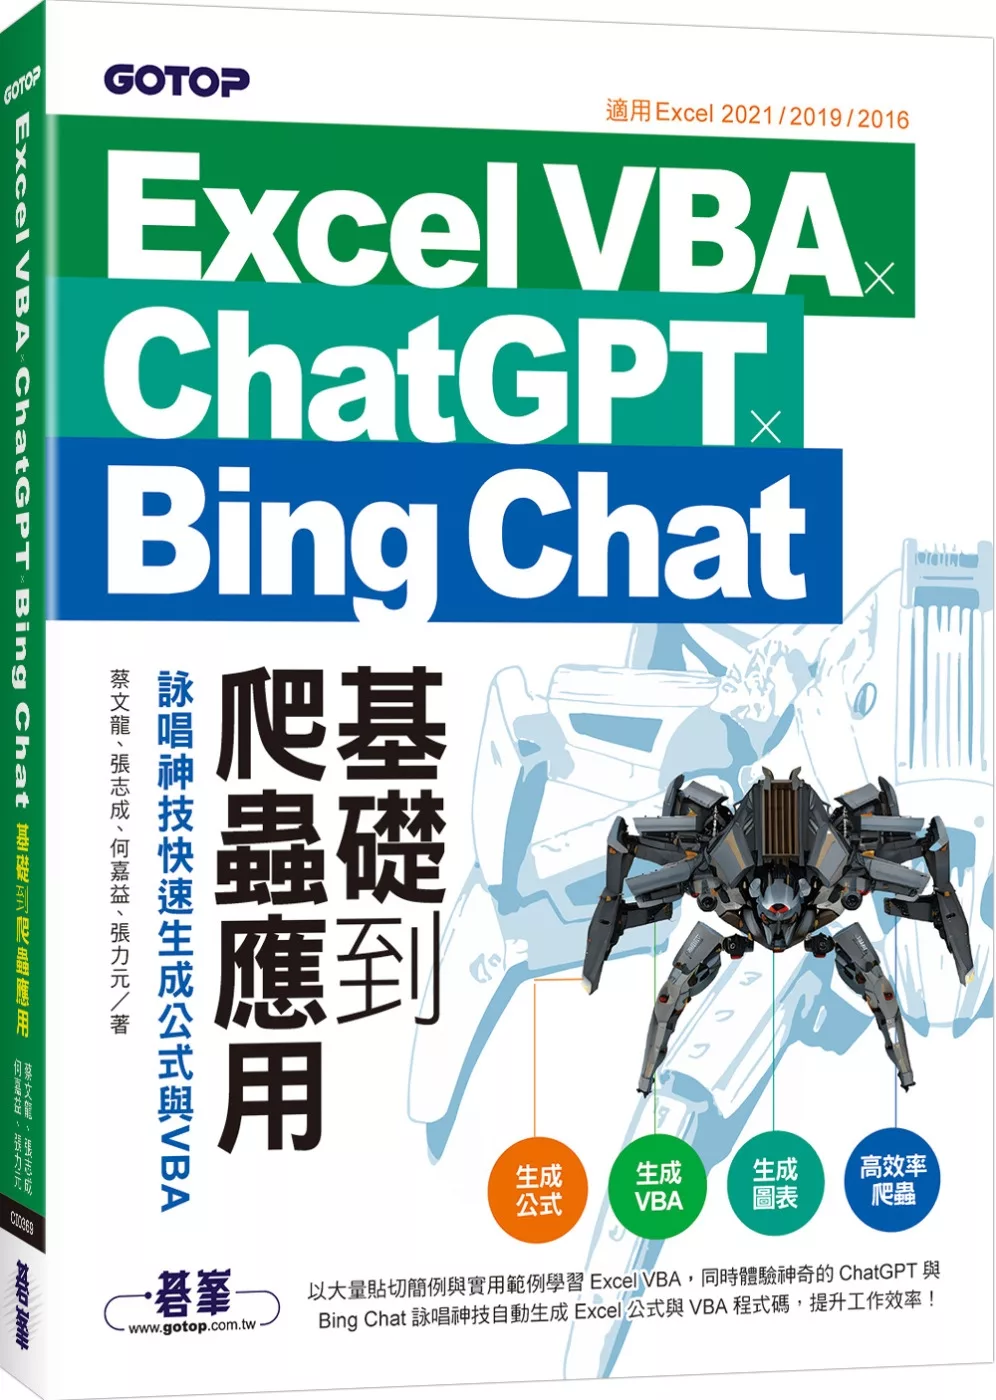 Excel VBA x ChatGPT x Bing Chat基礎到爬蟲應用：詠唱神技快速生成公式與VBA